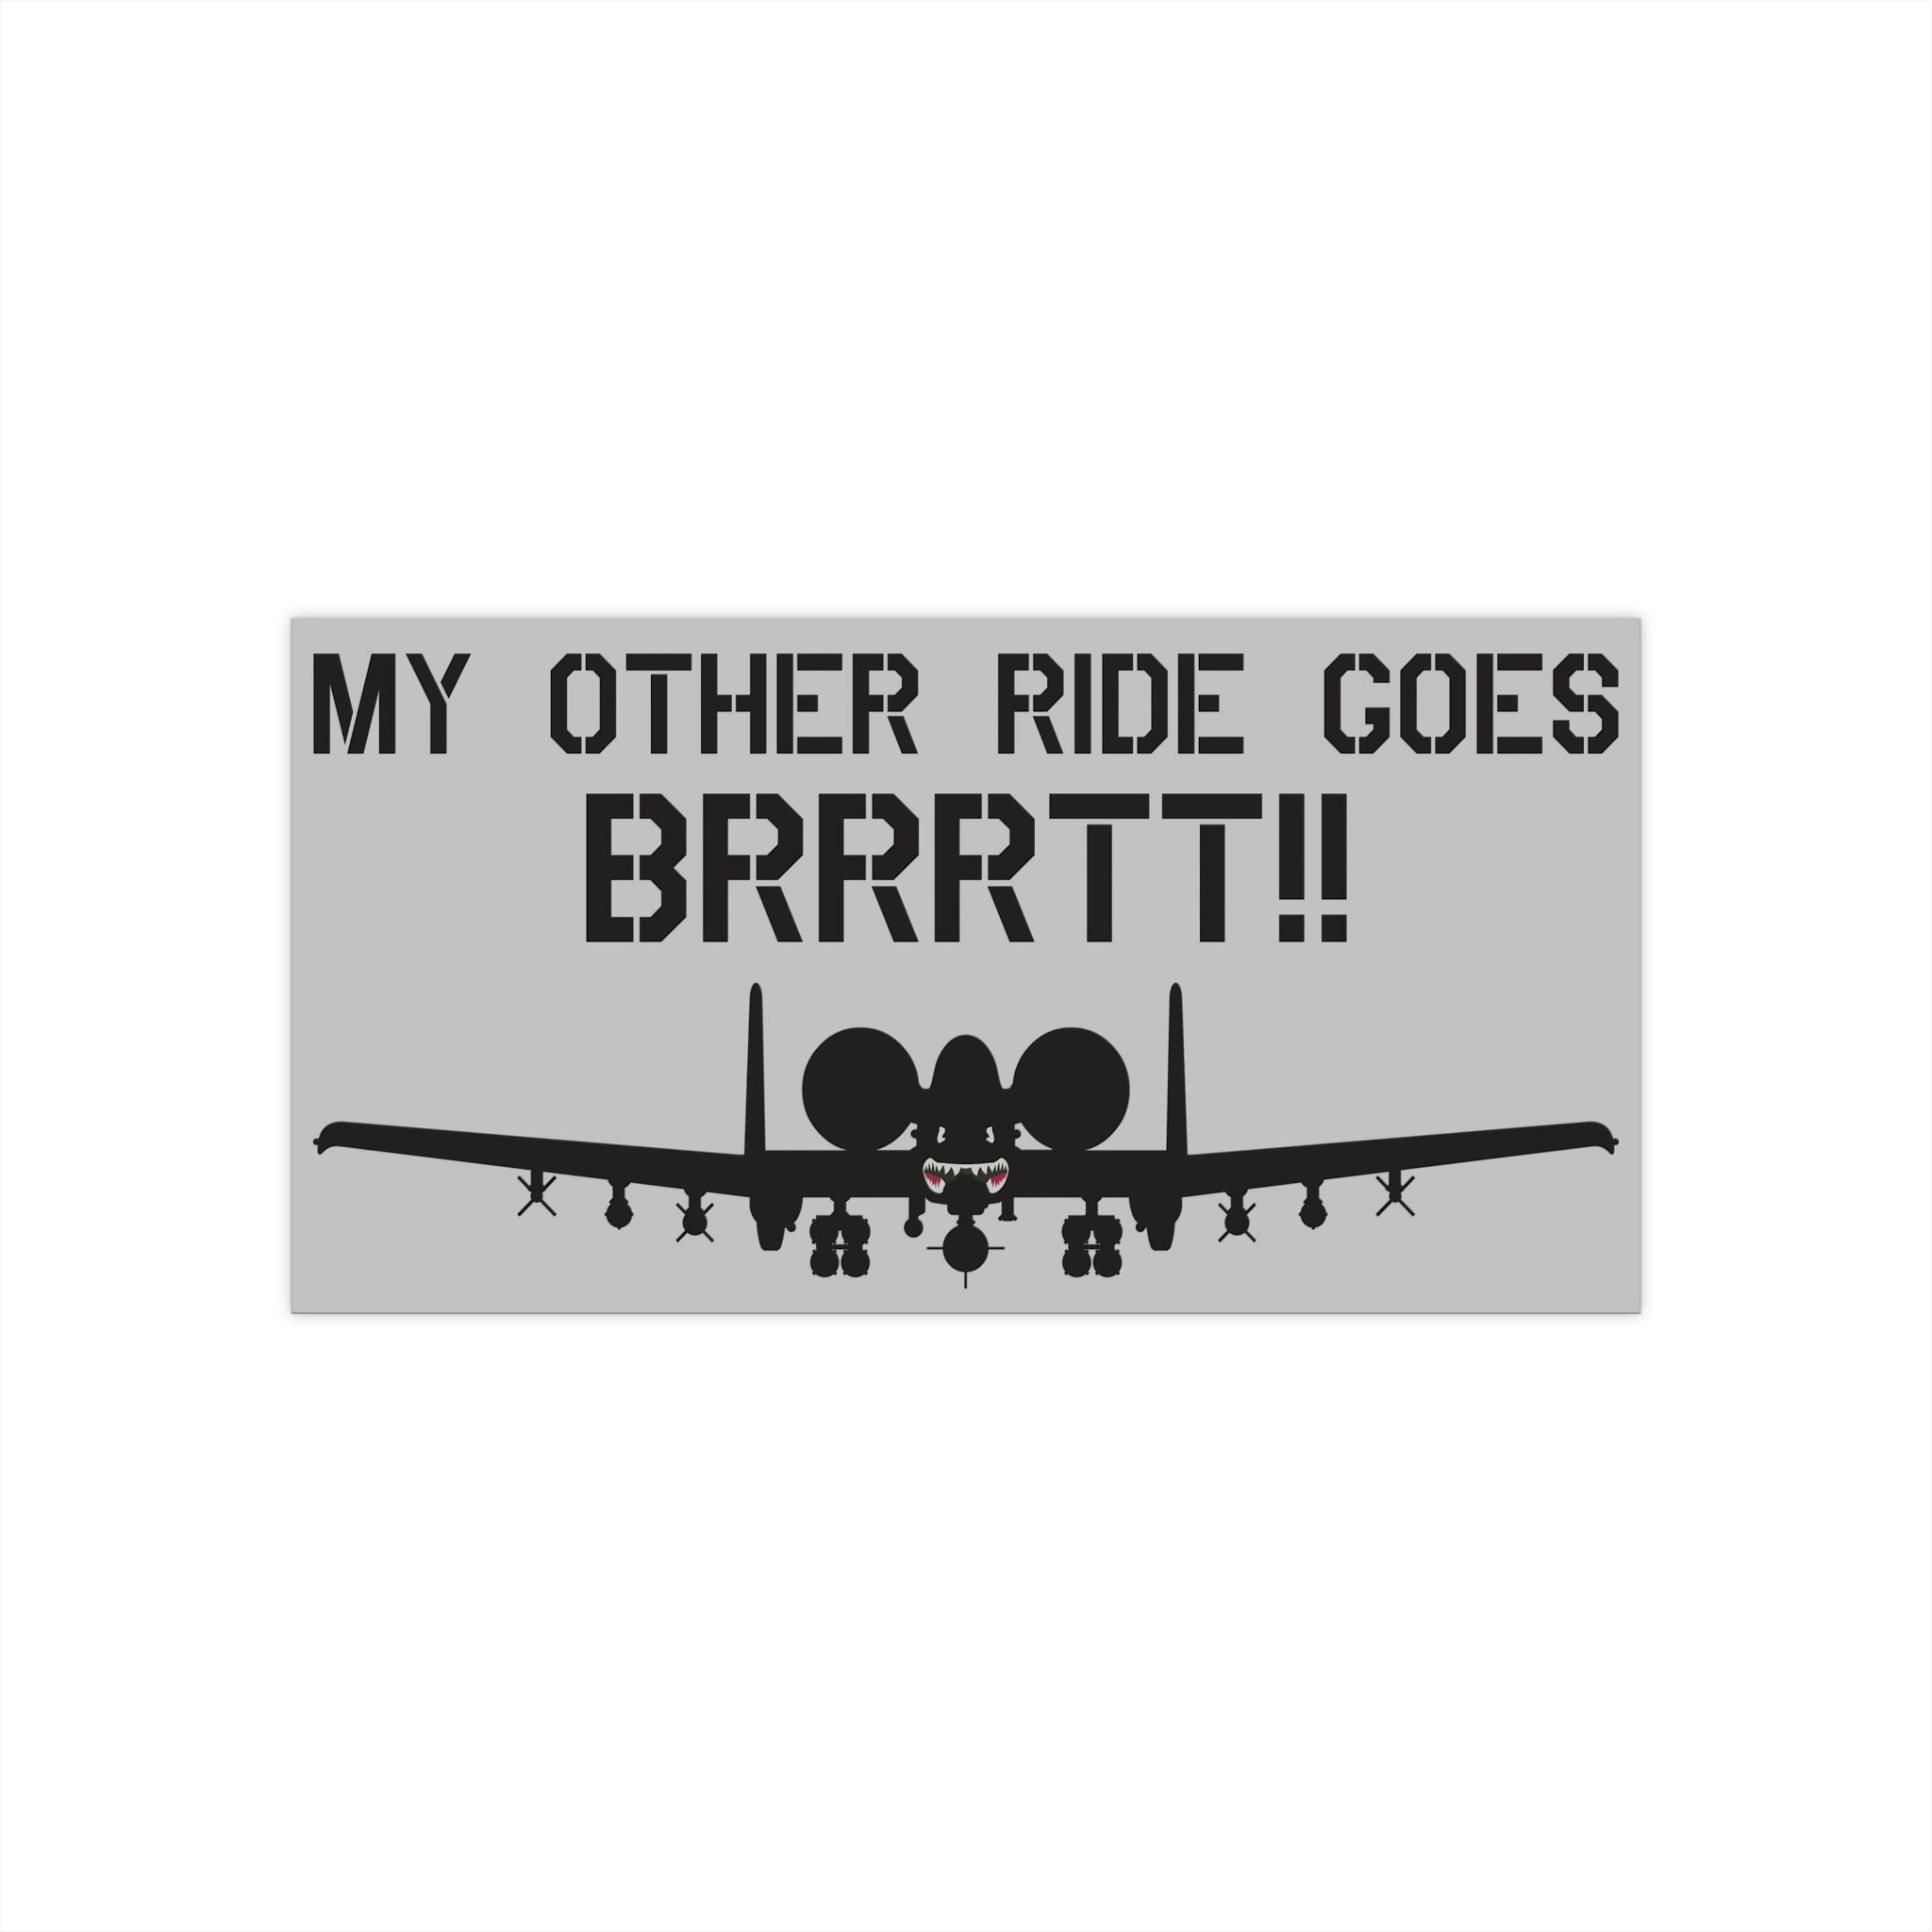 "My Other Ride Goes BRRRTT!!" Bumper Stickers - I Love a Hangar